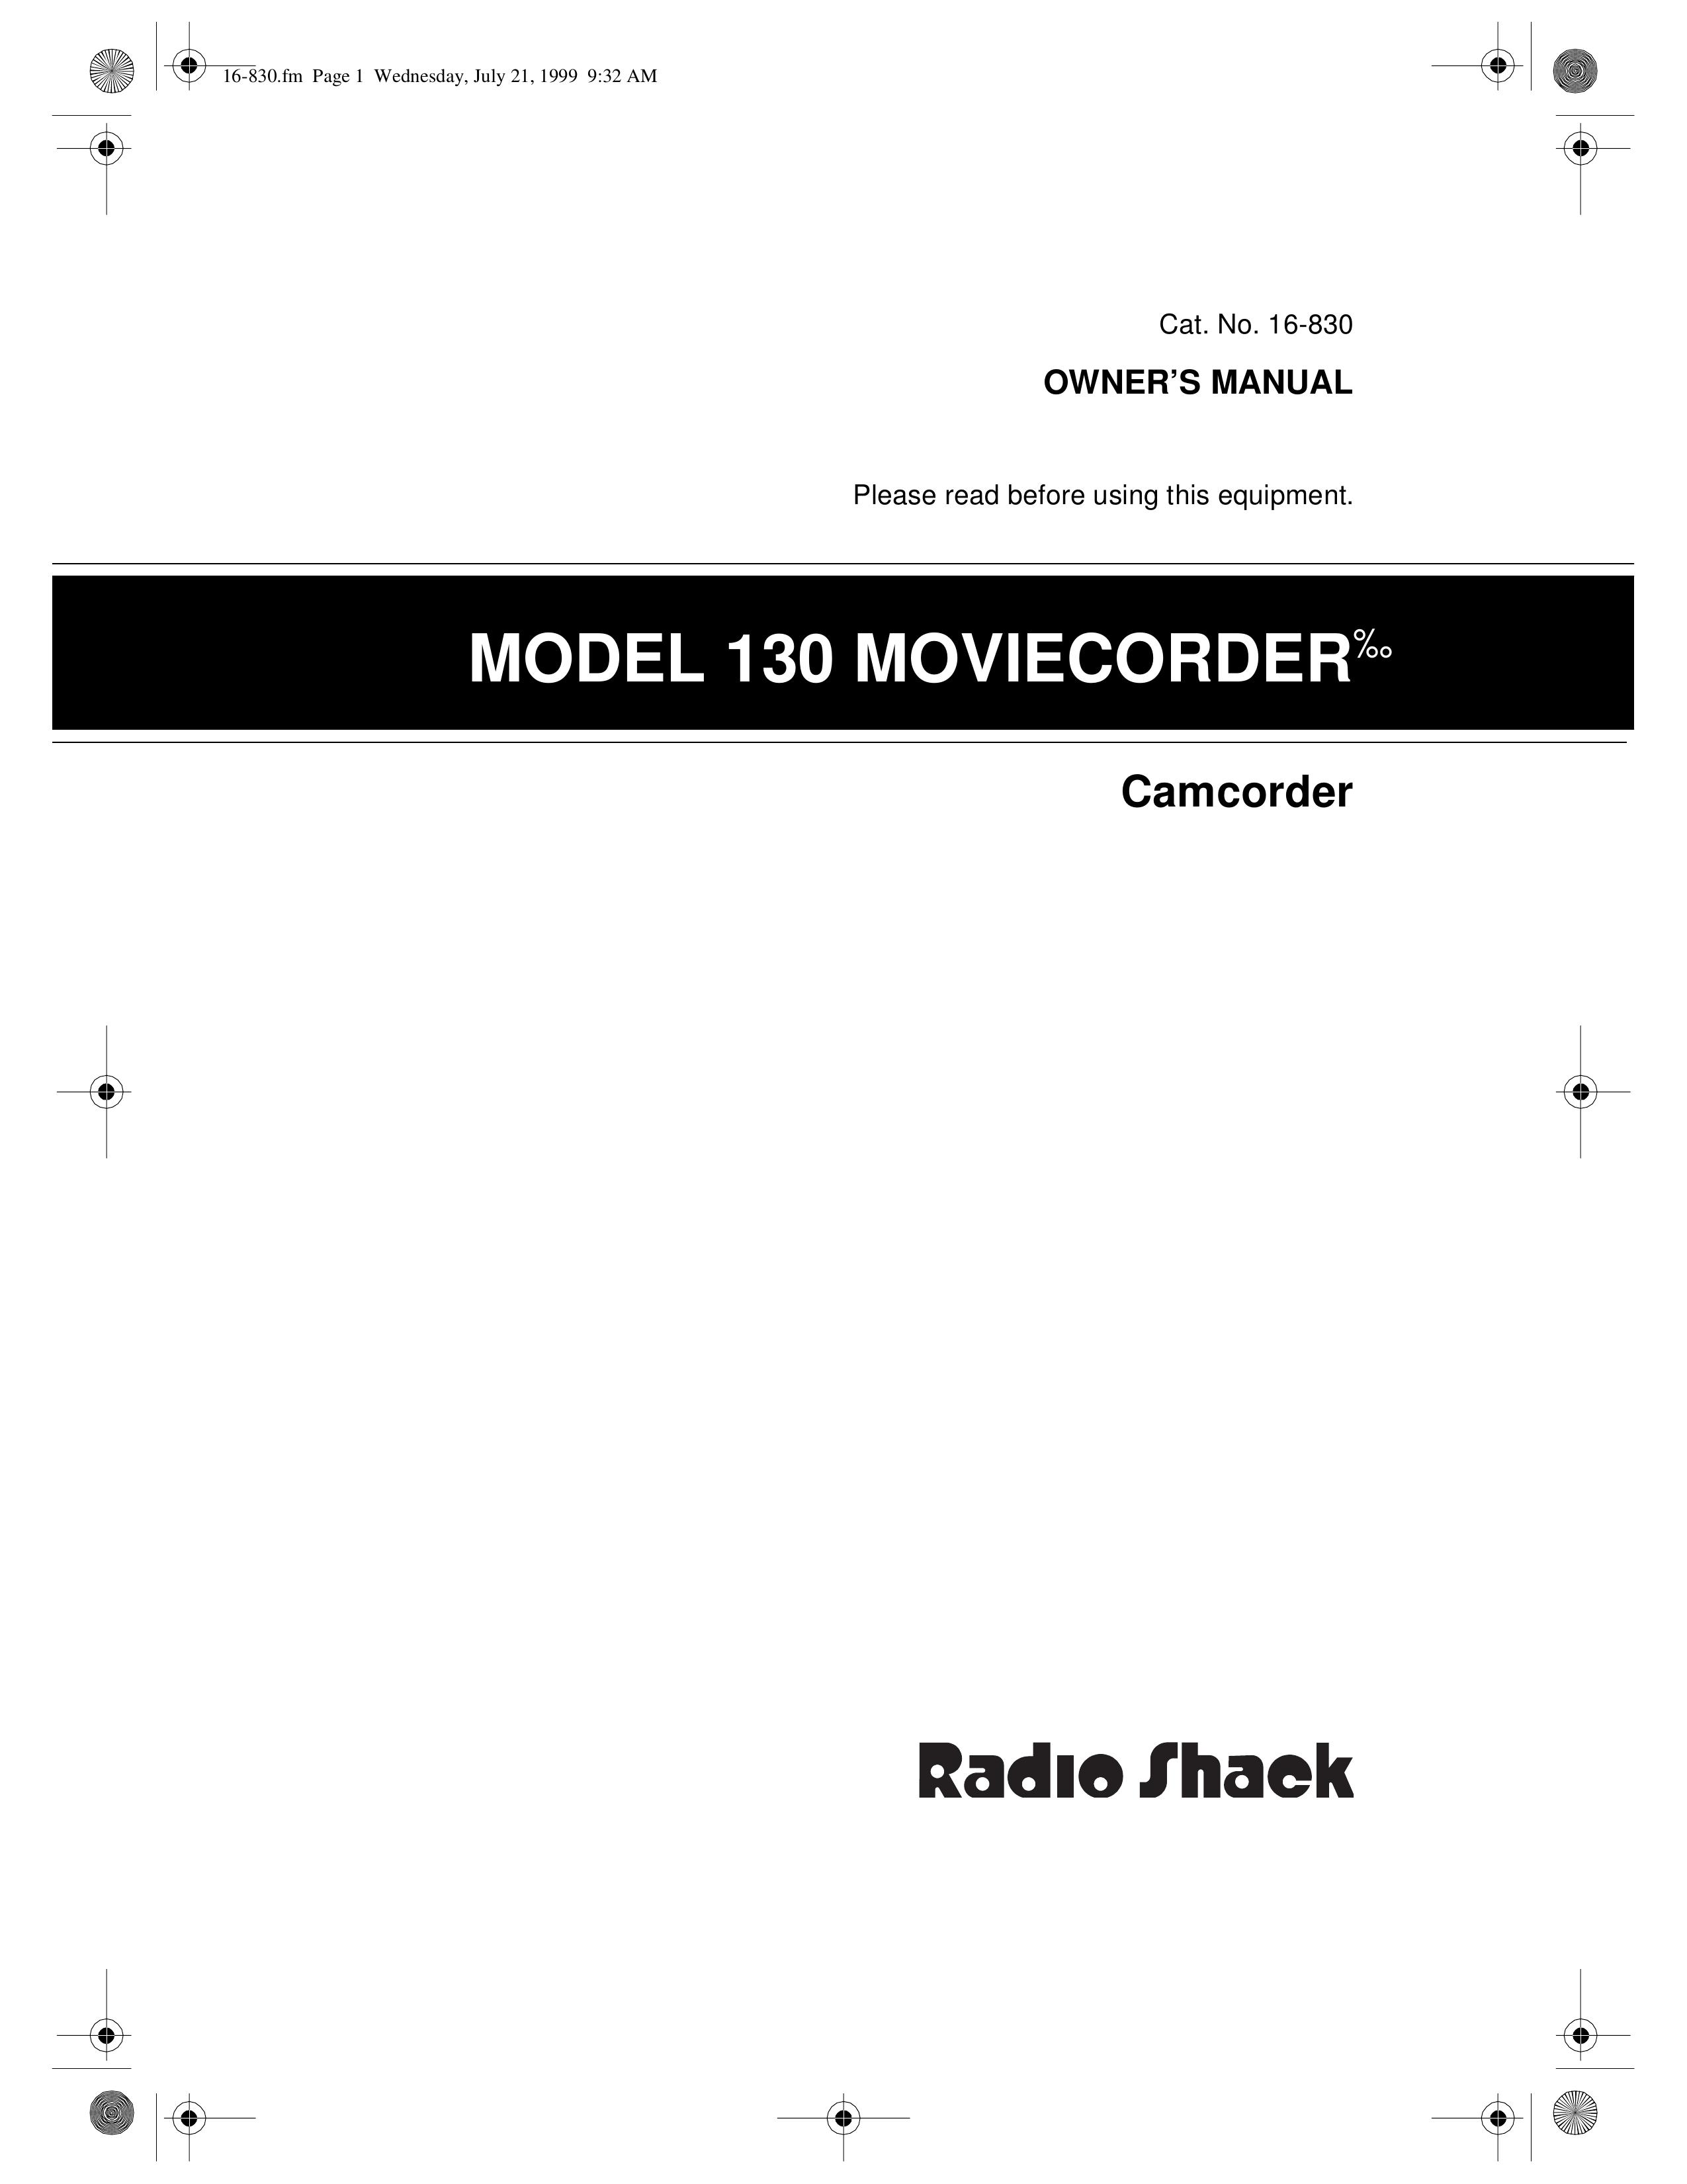 Radio Shack 16-830 Camcorder User Manual